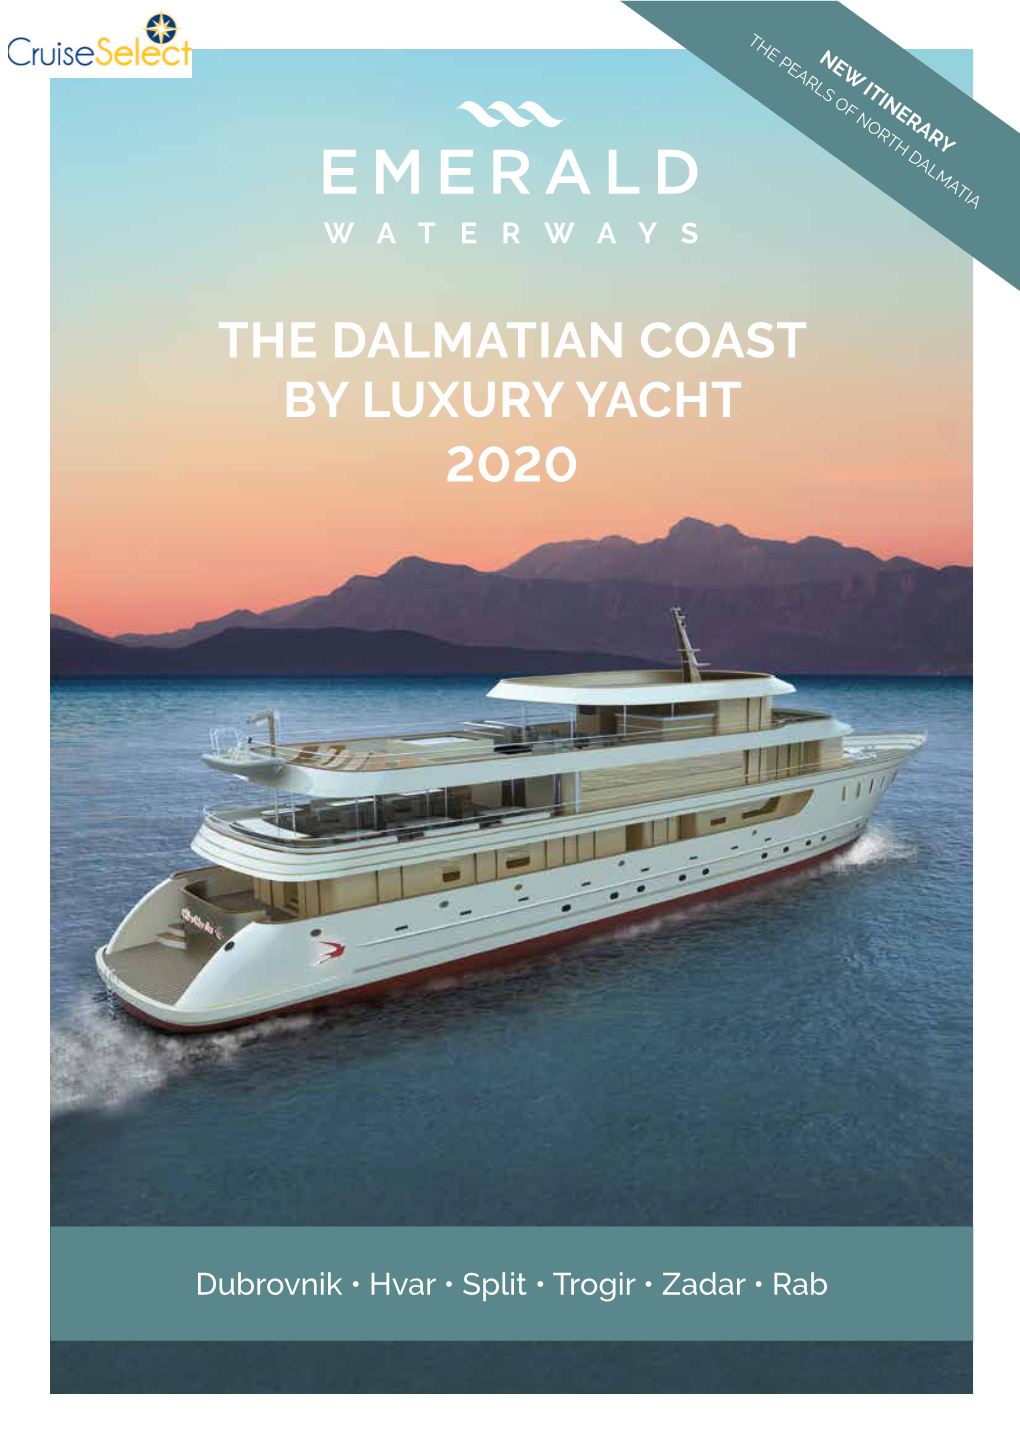 The Dalmatian Coast by Luxury Yacht 2020